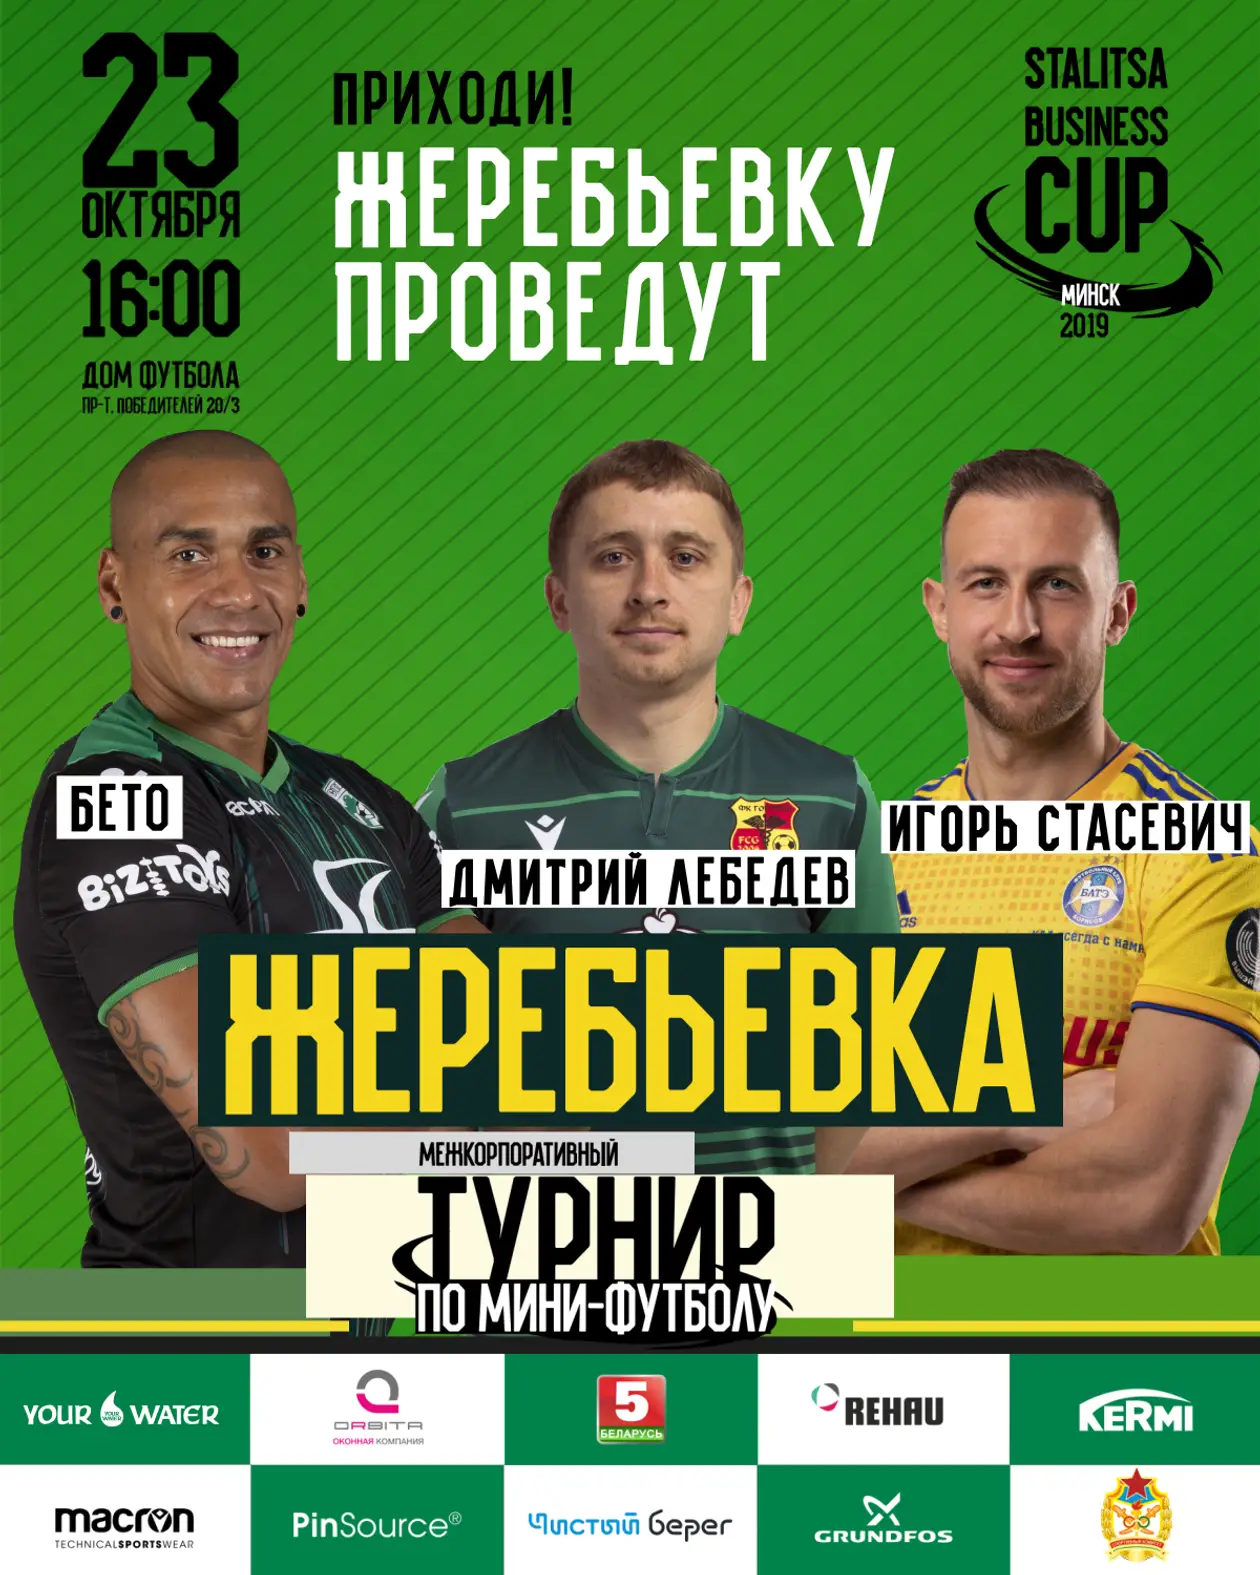 Стасевич, Лебедев и Бето определят группы на Stalitsa Business Cup-2019